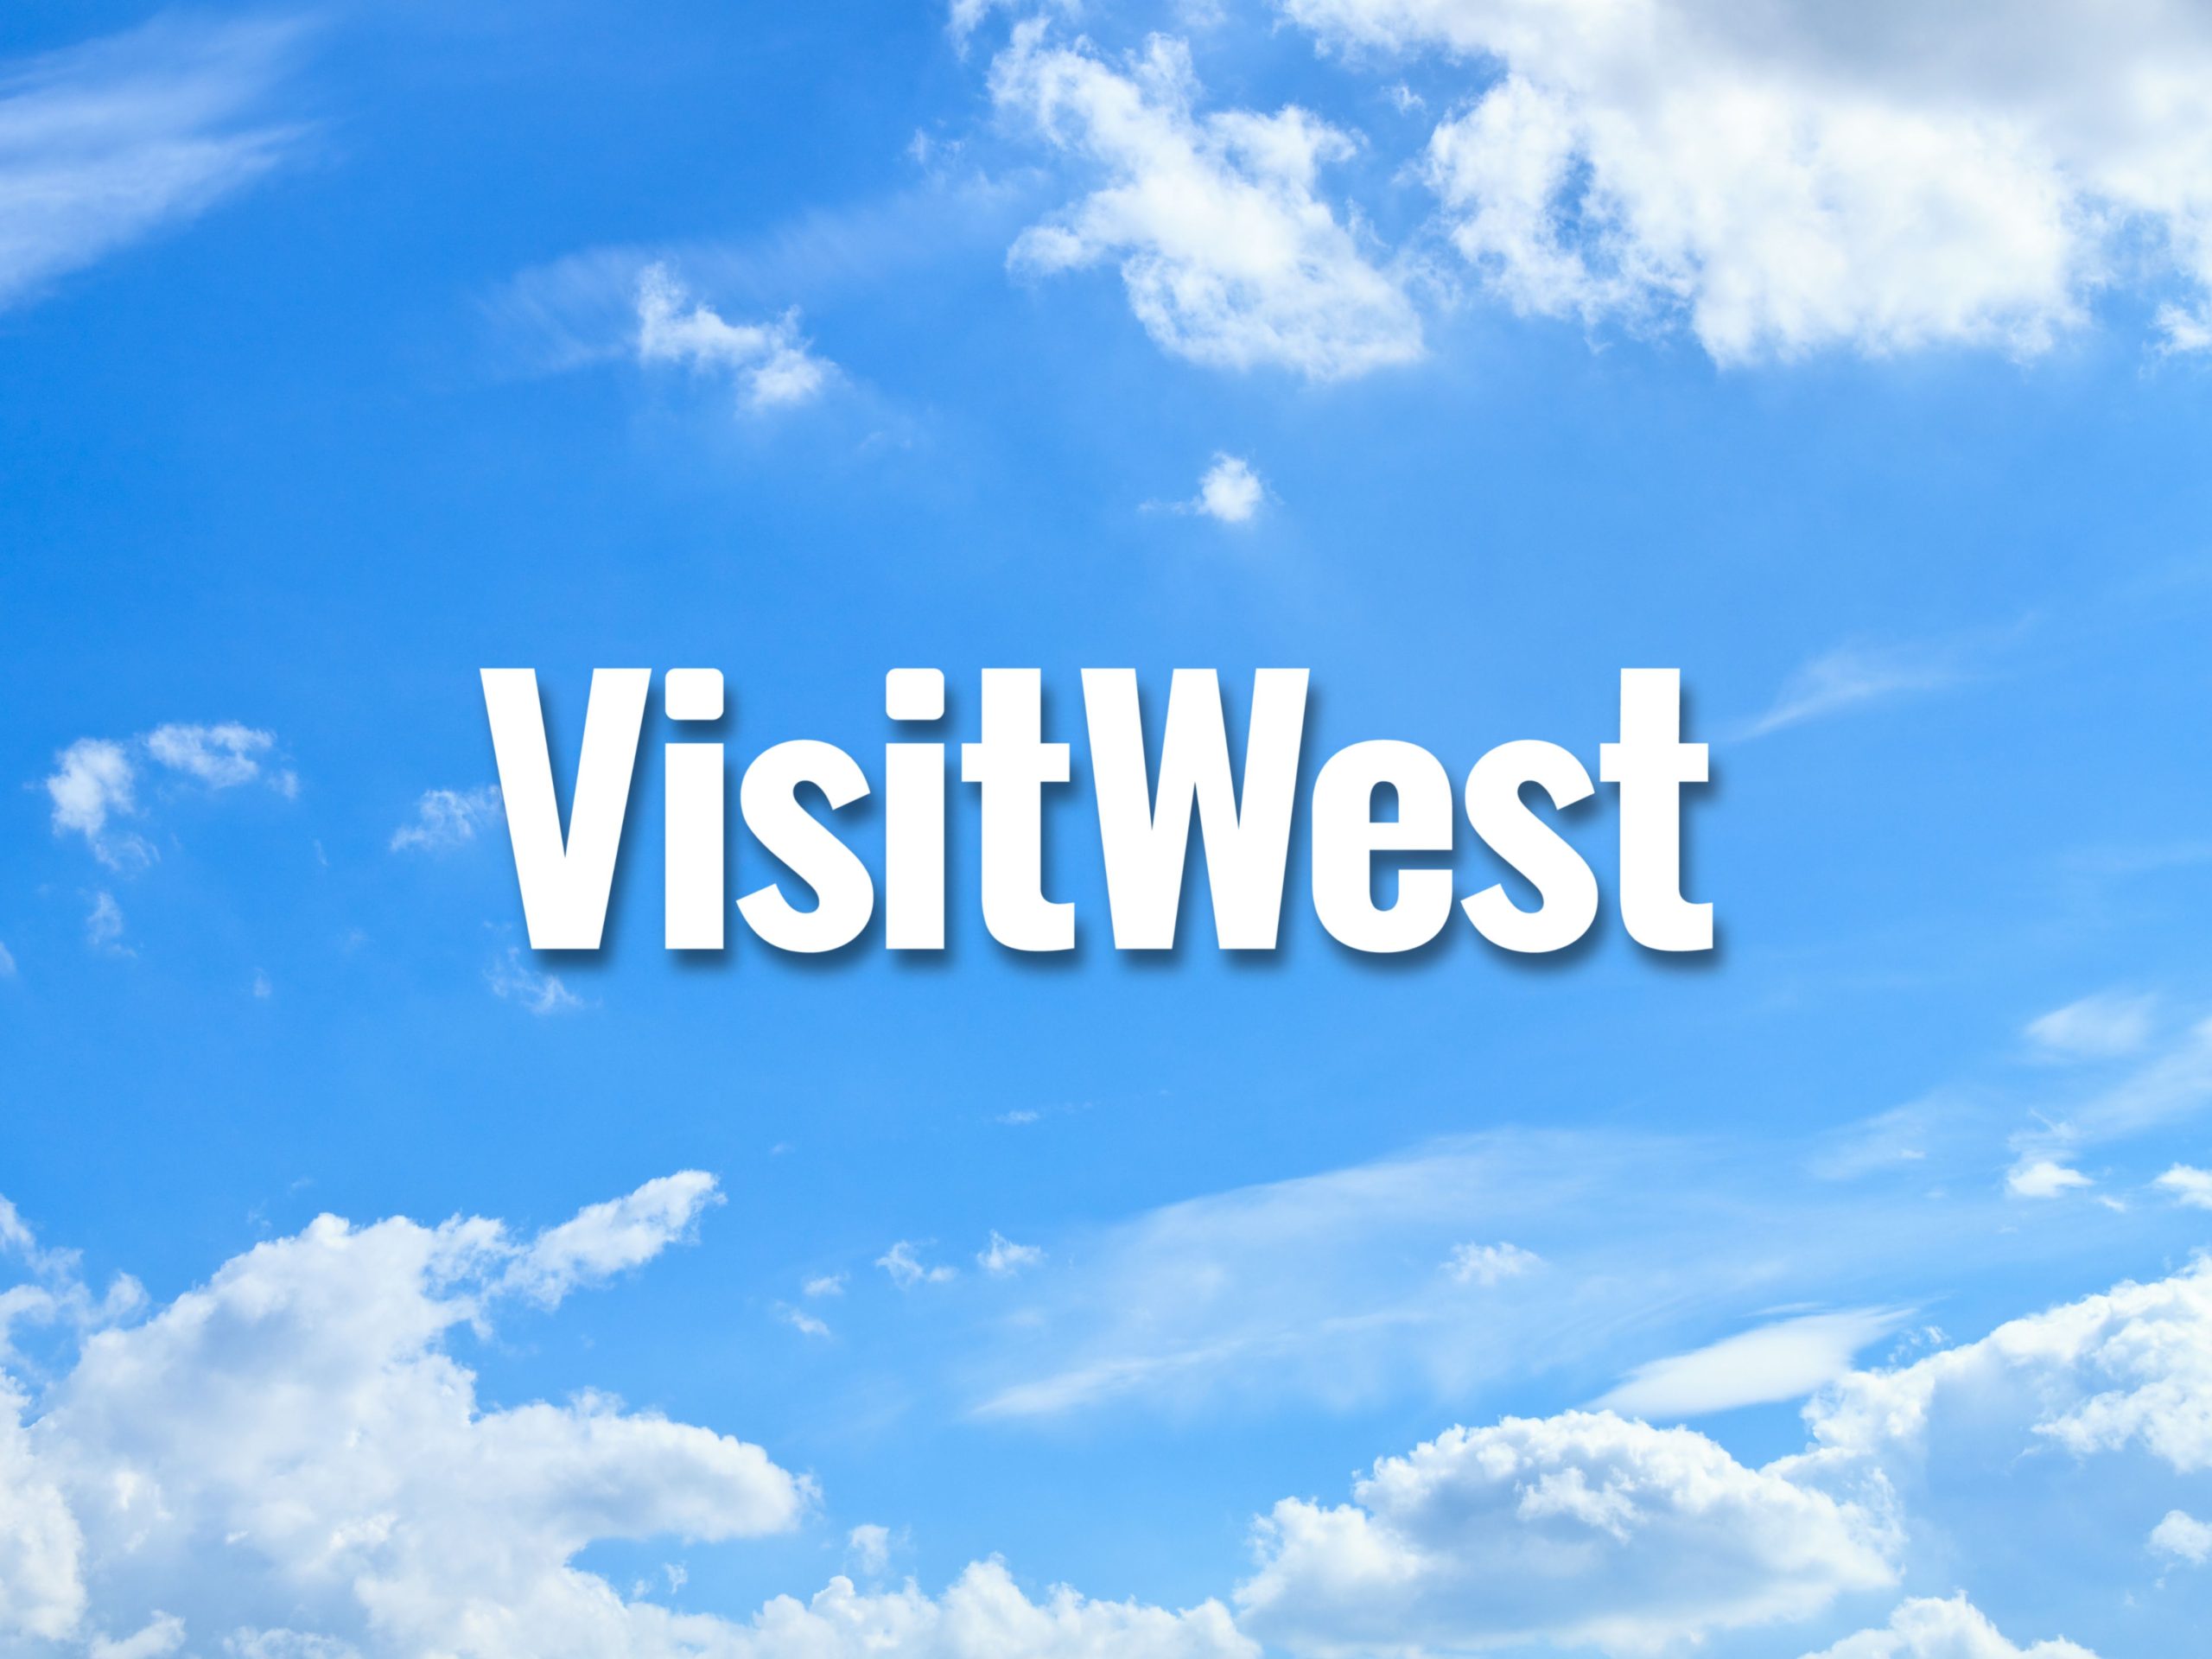 Visit West: Enhance Your Tourism Business With TXGB